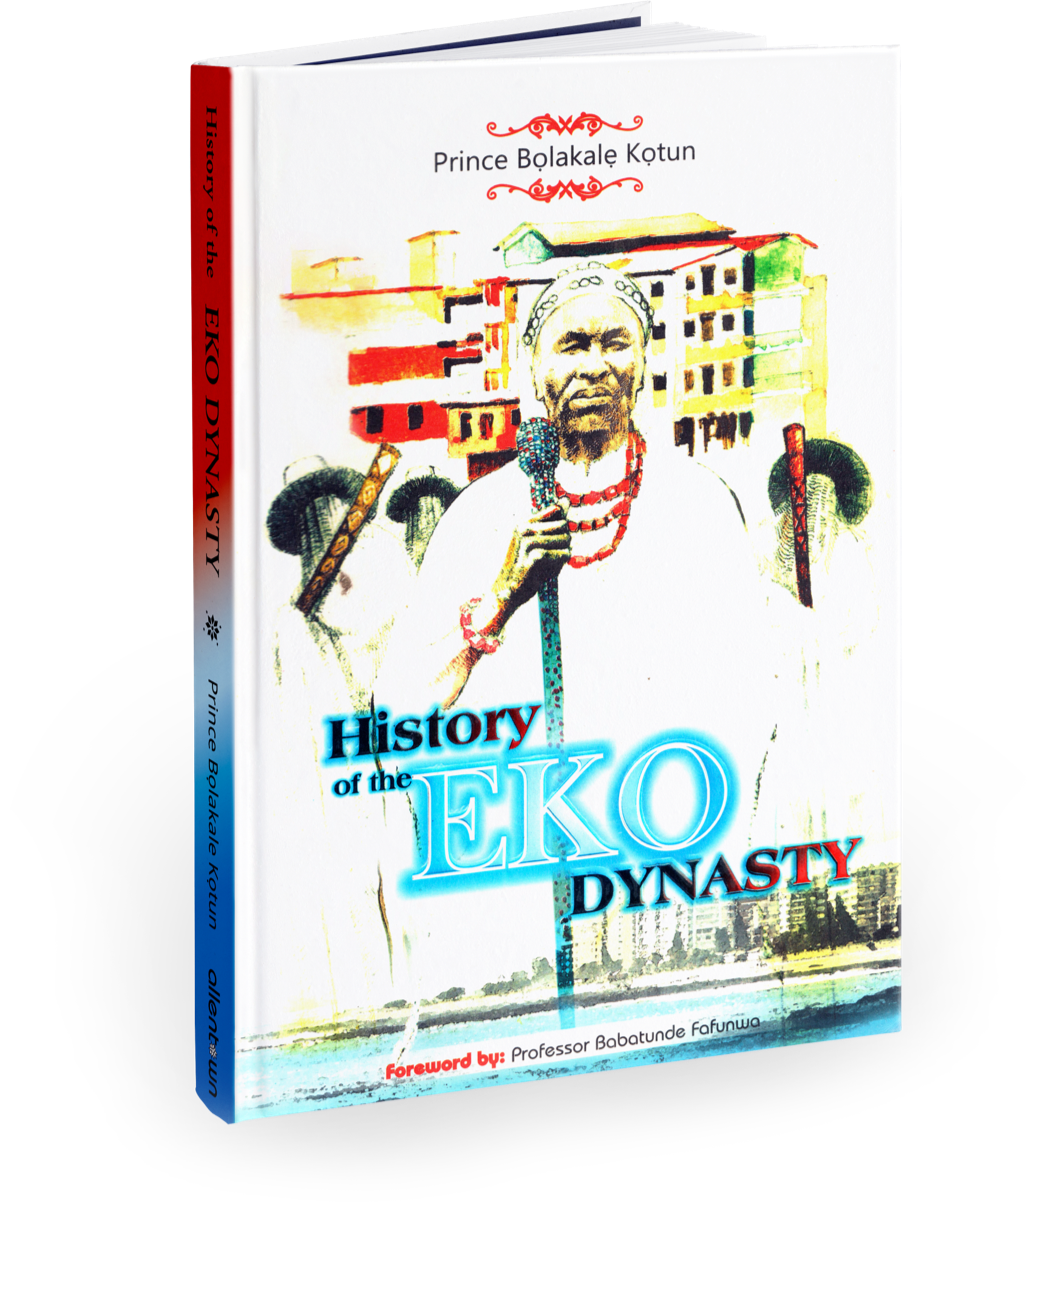 The history of Eko dynasty